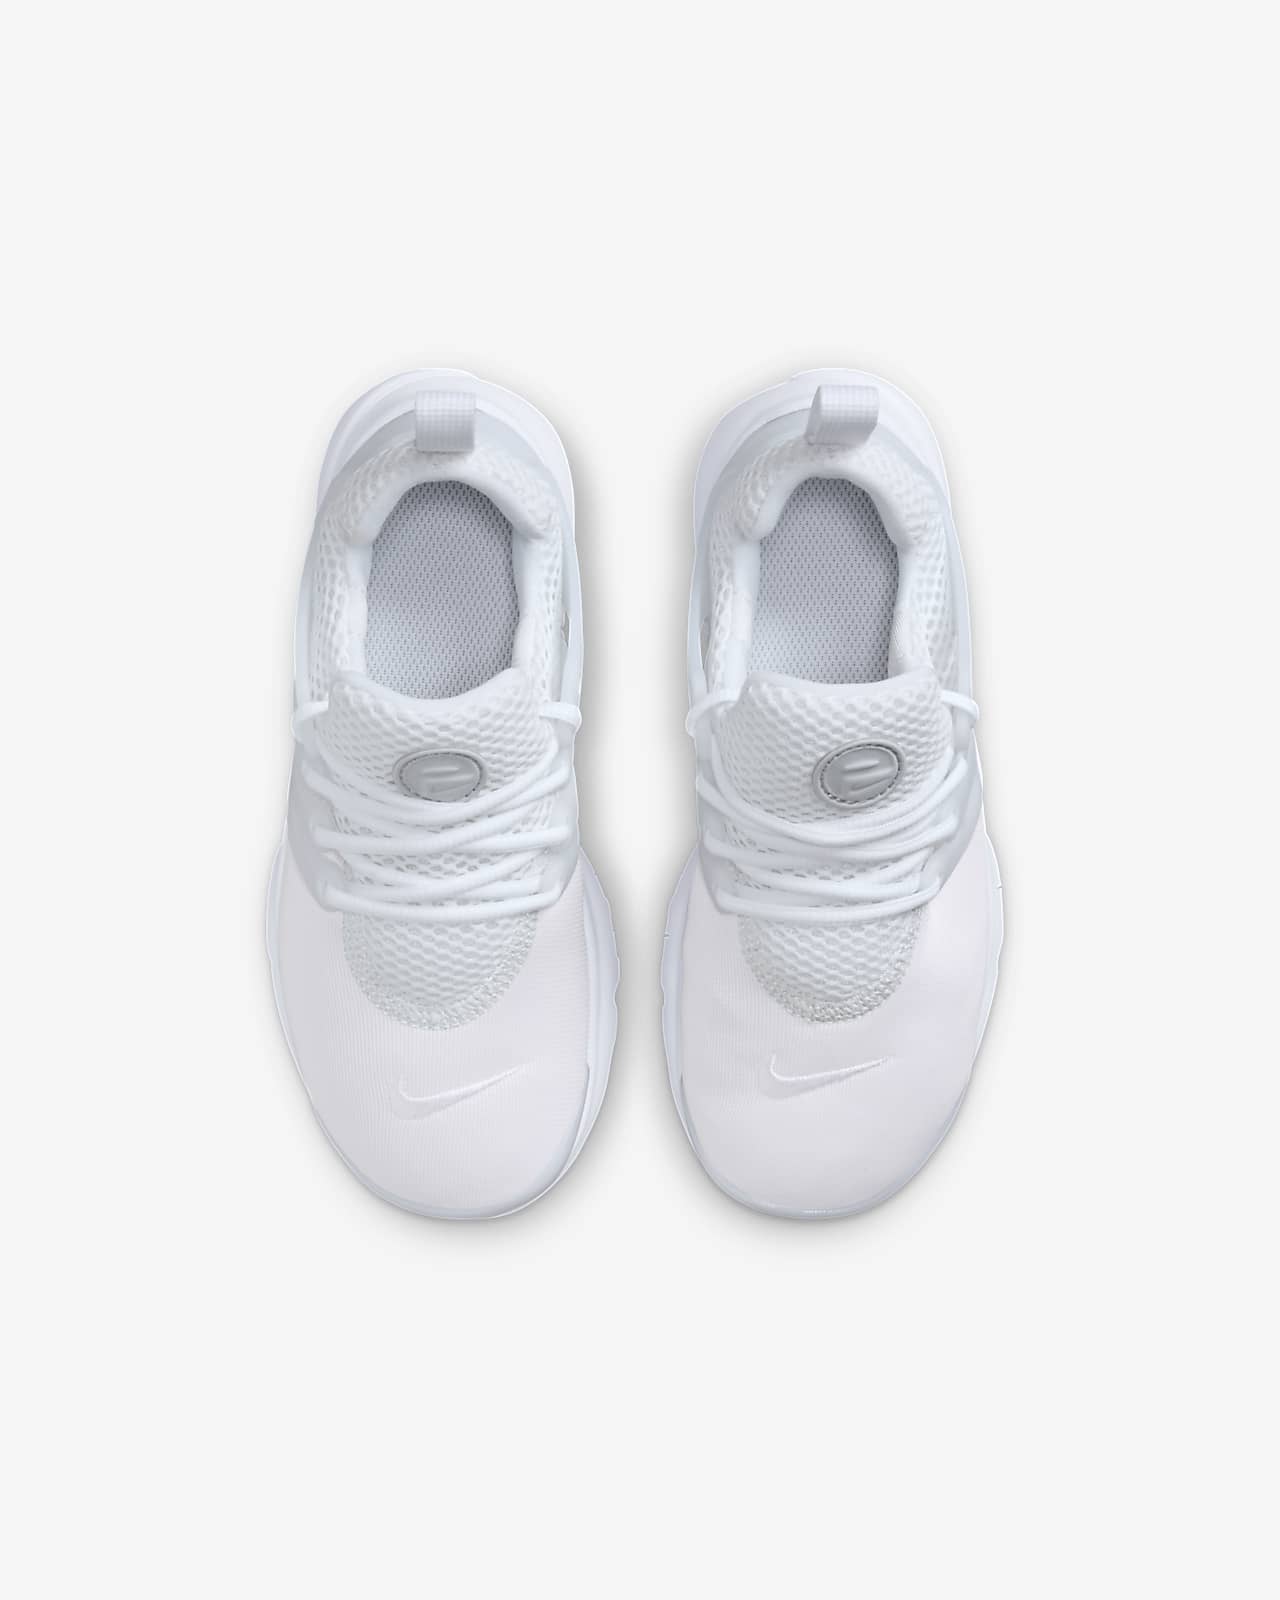 Zending Voorman Daarom Nike Presto Little Kids' Shoes. Nike.com